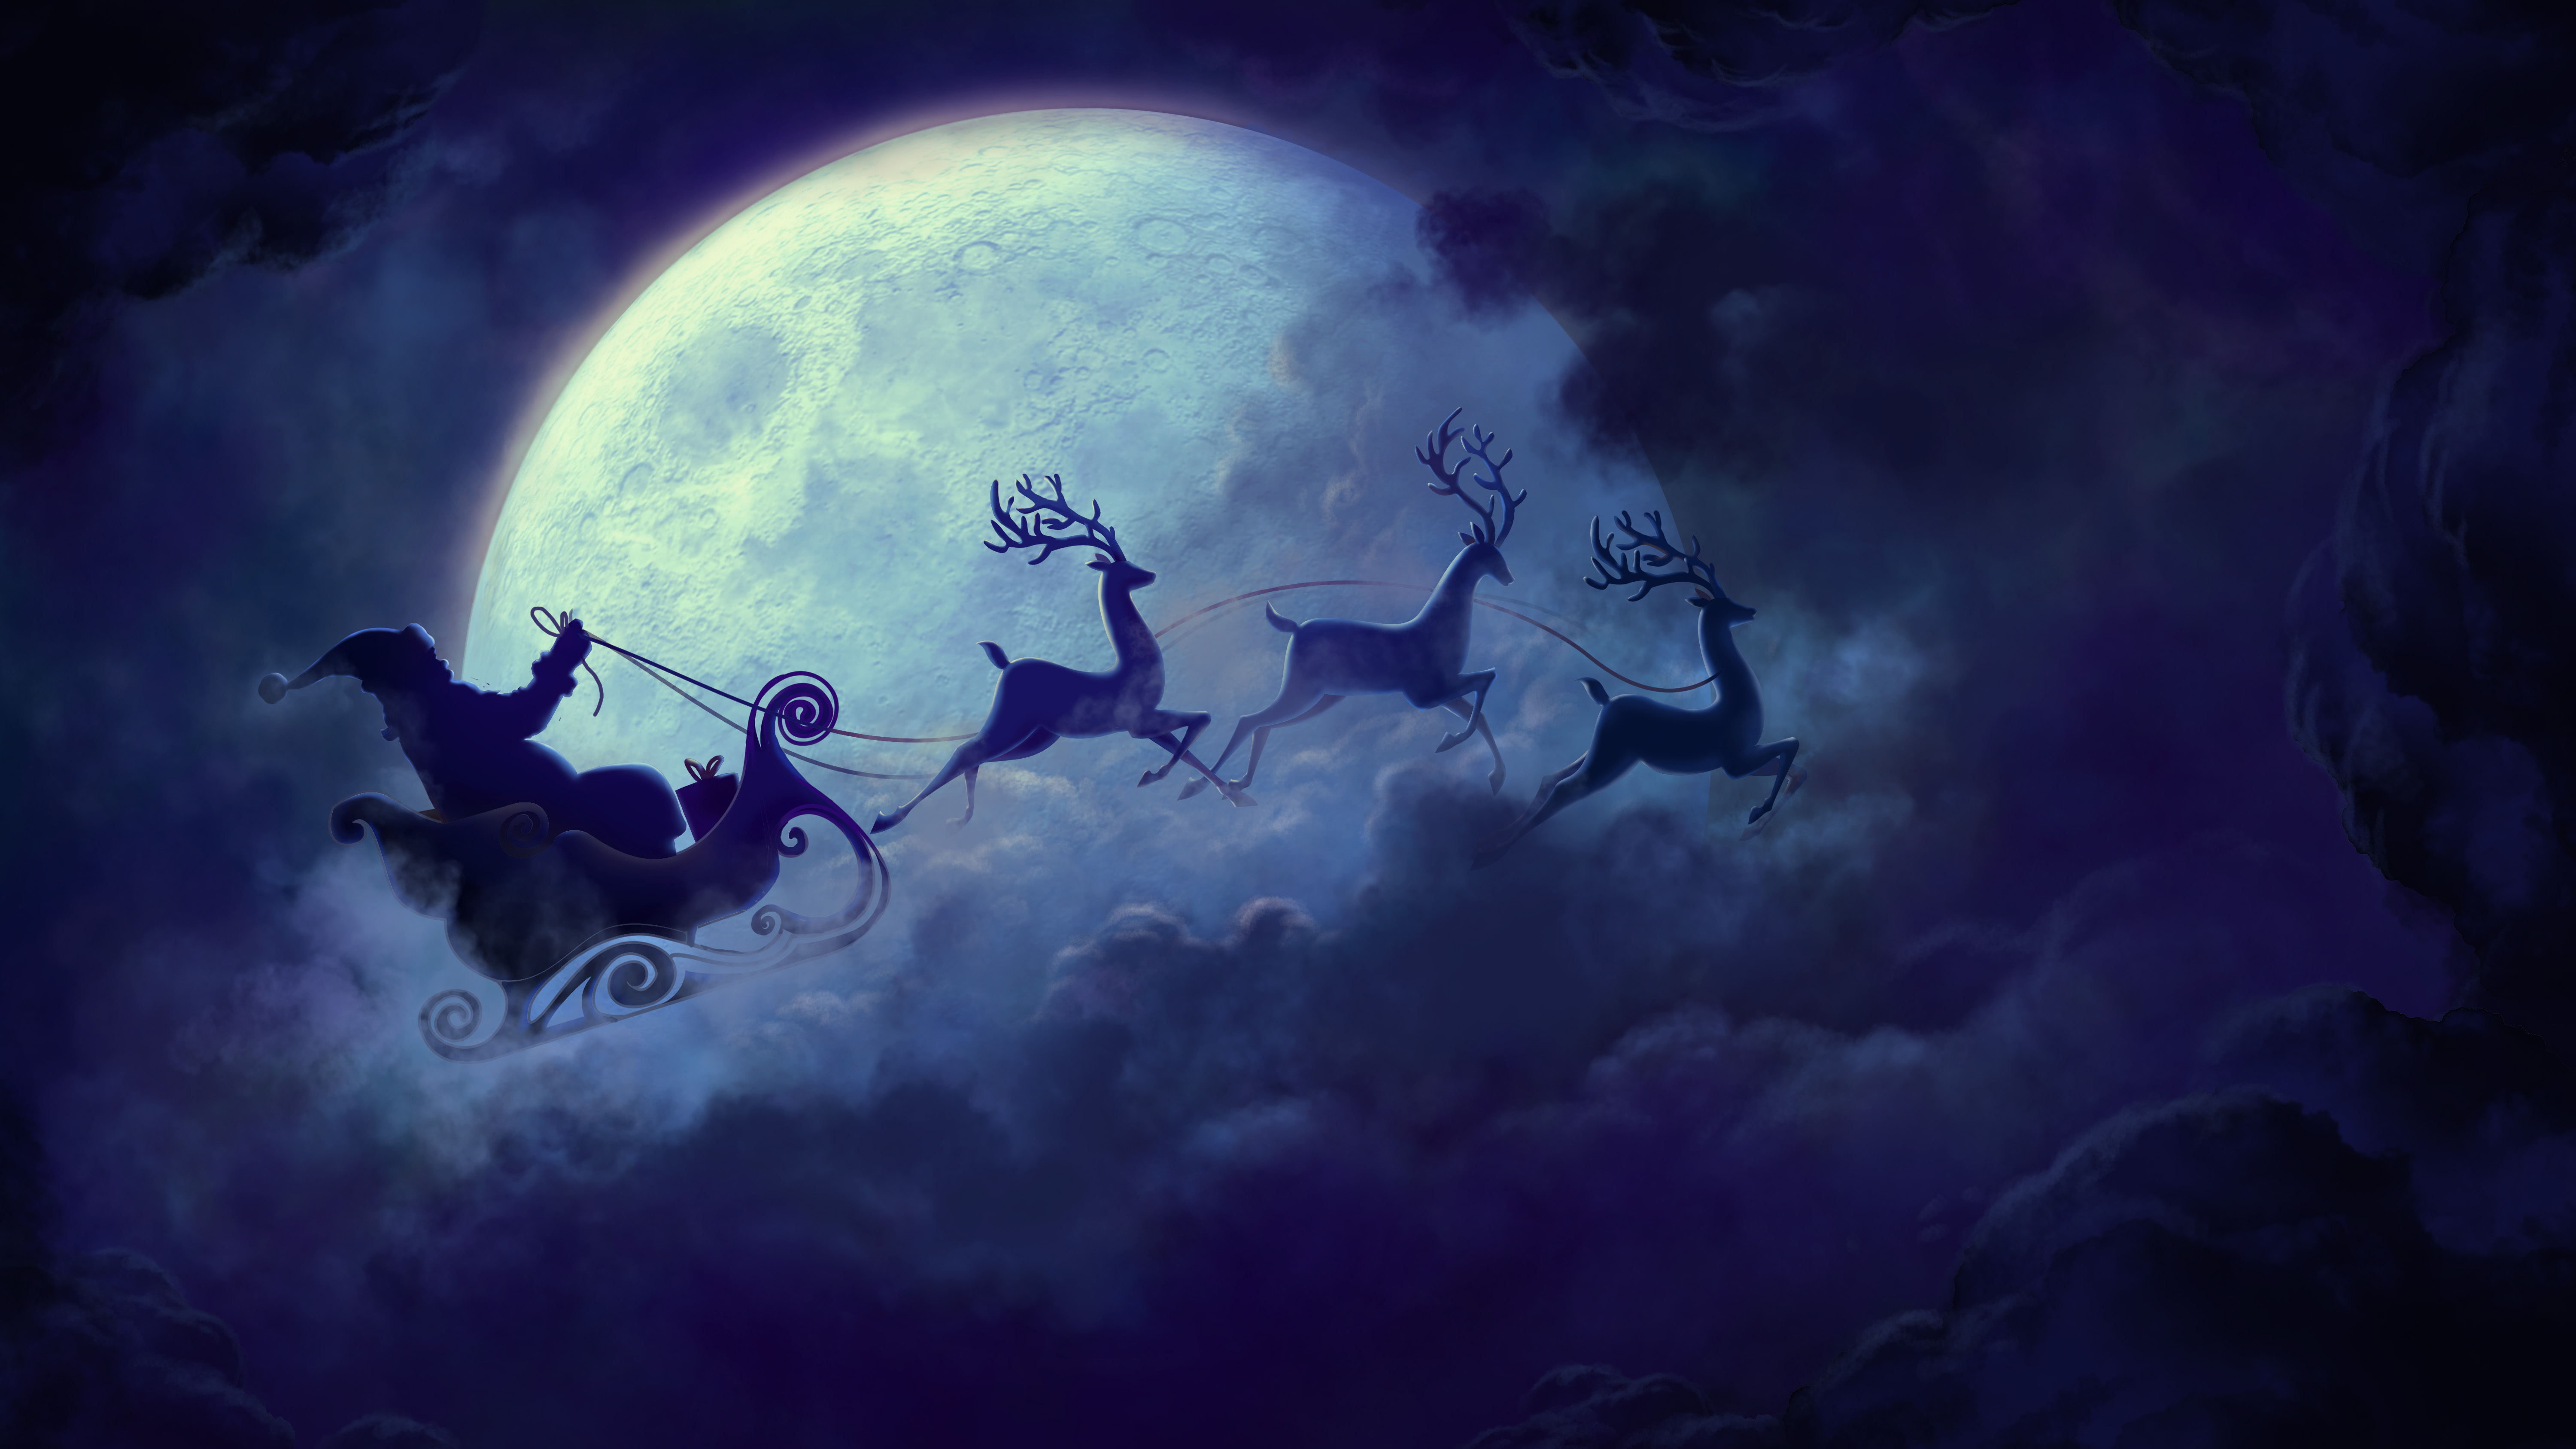 Wallpapers Christmas holidays Santa Claus sleigh on the desktop